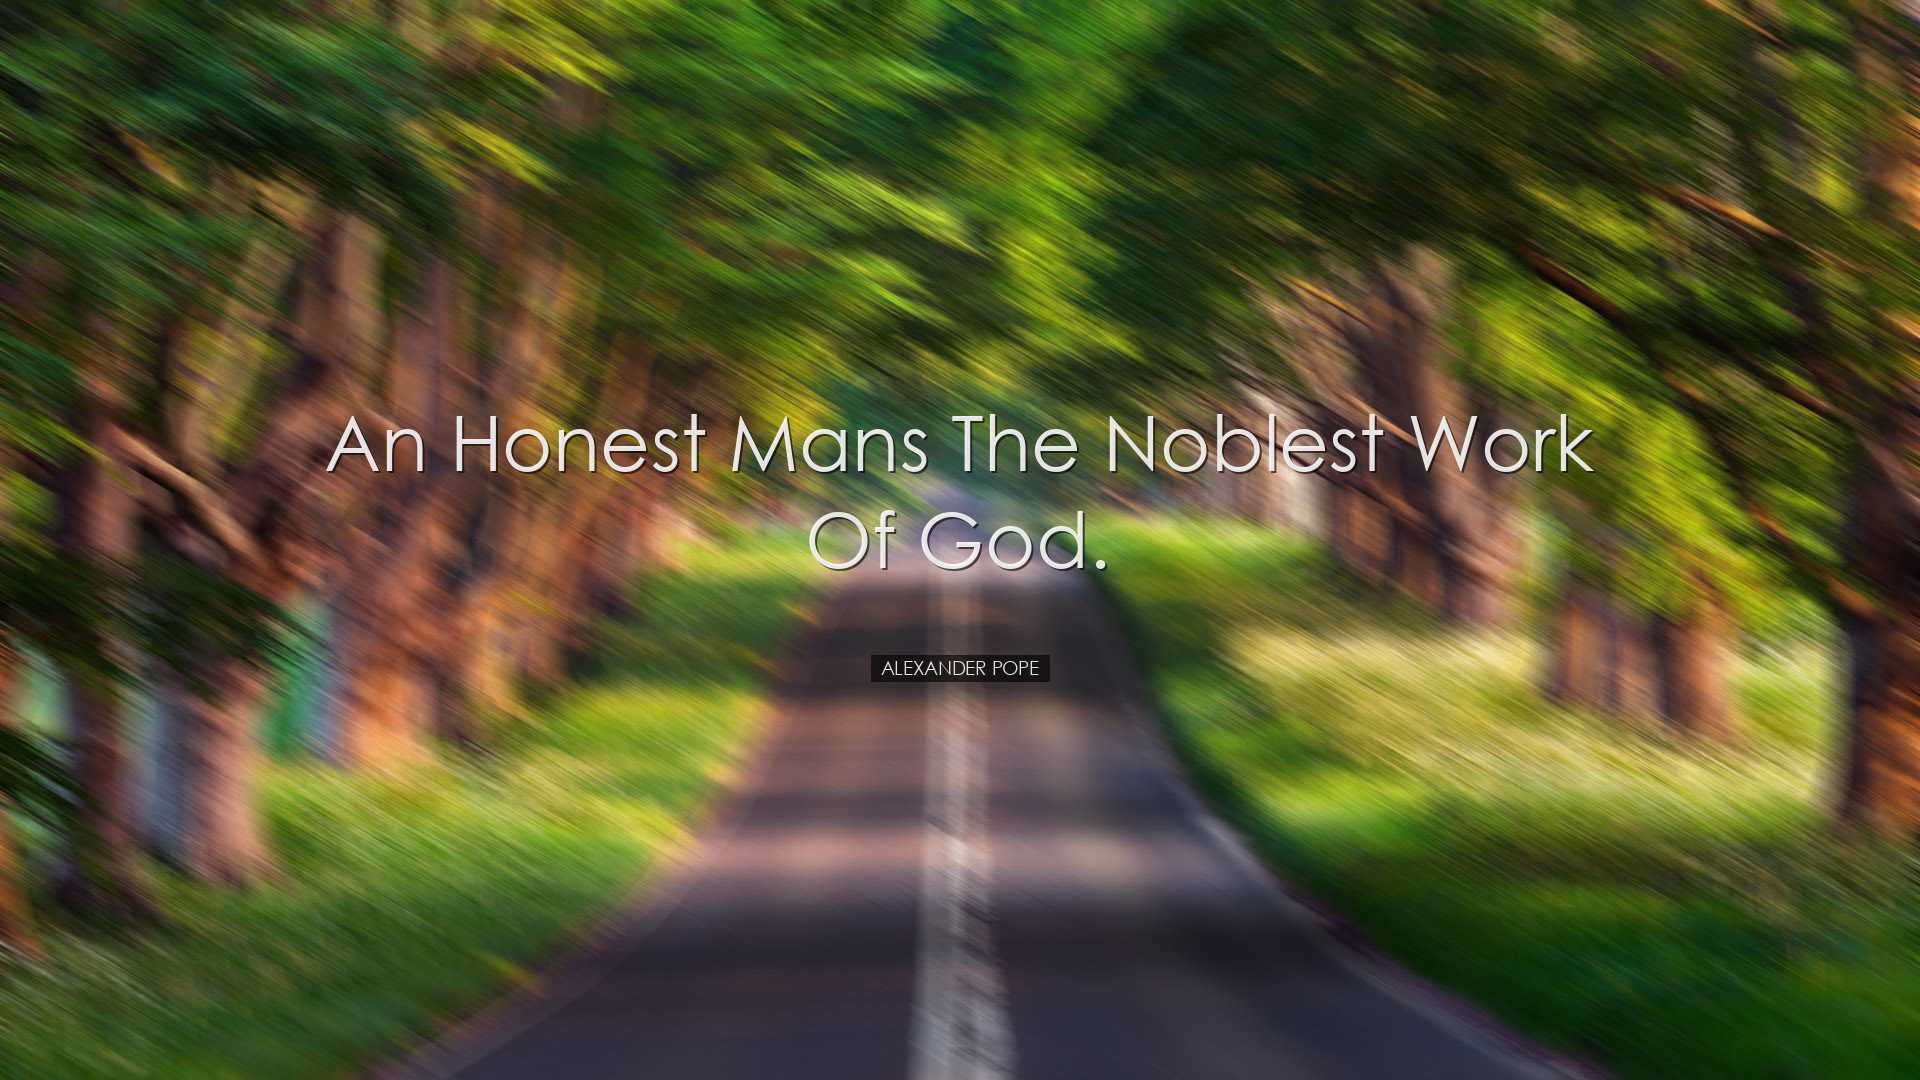 An honest mans the noblest work of God. - Alexander Pope